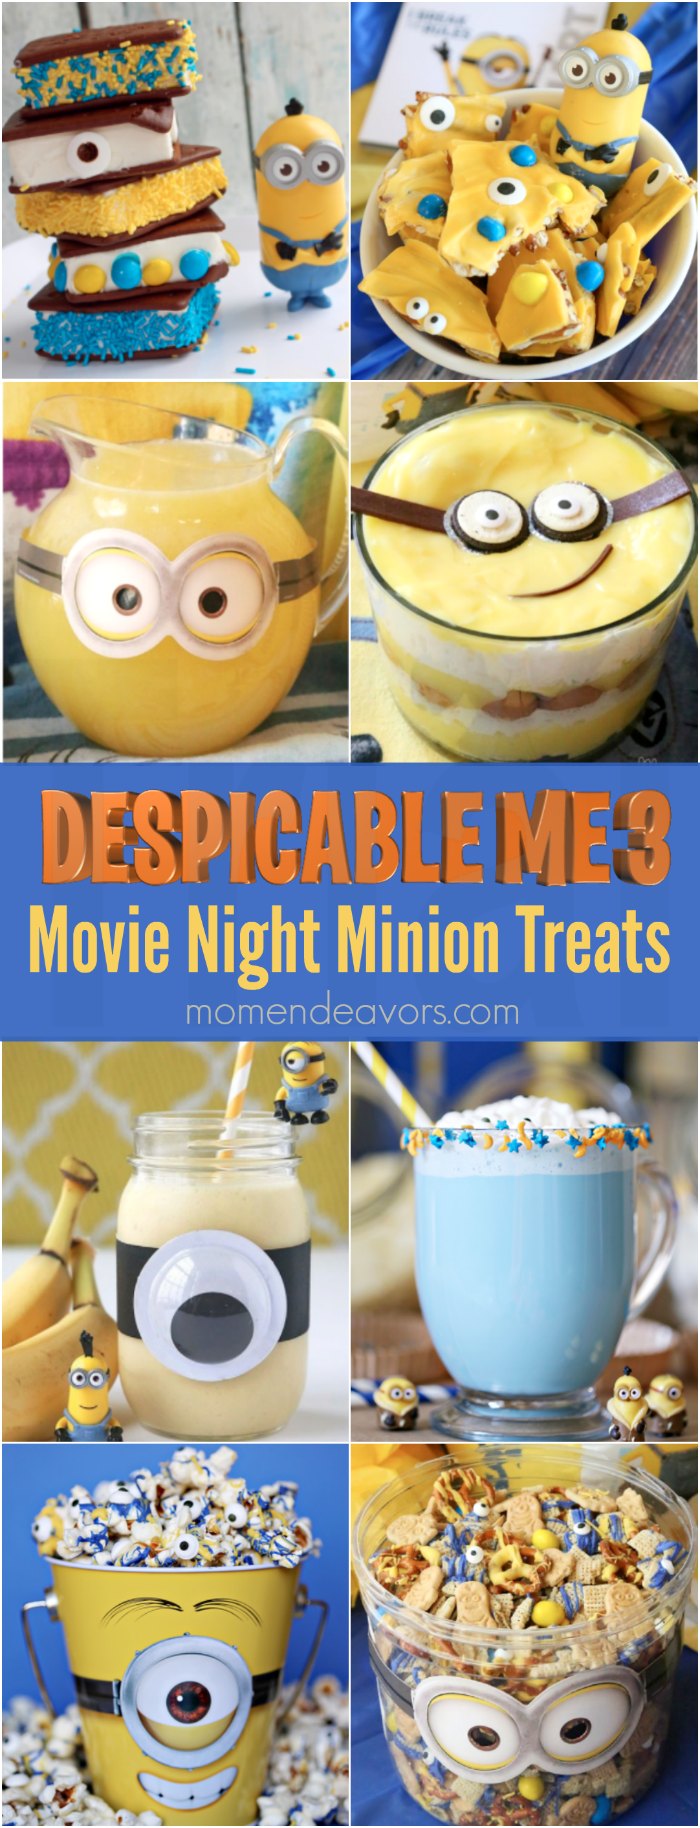 Despicable Me 3 Minions Movie Night Treats